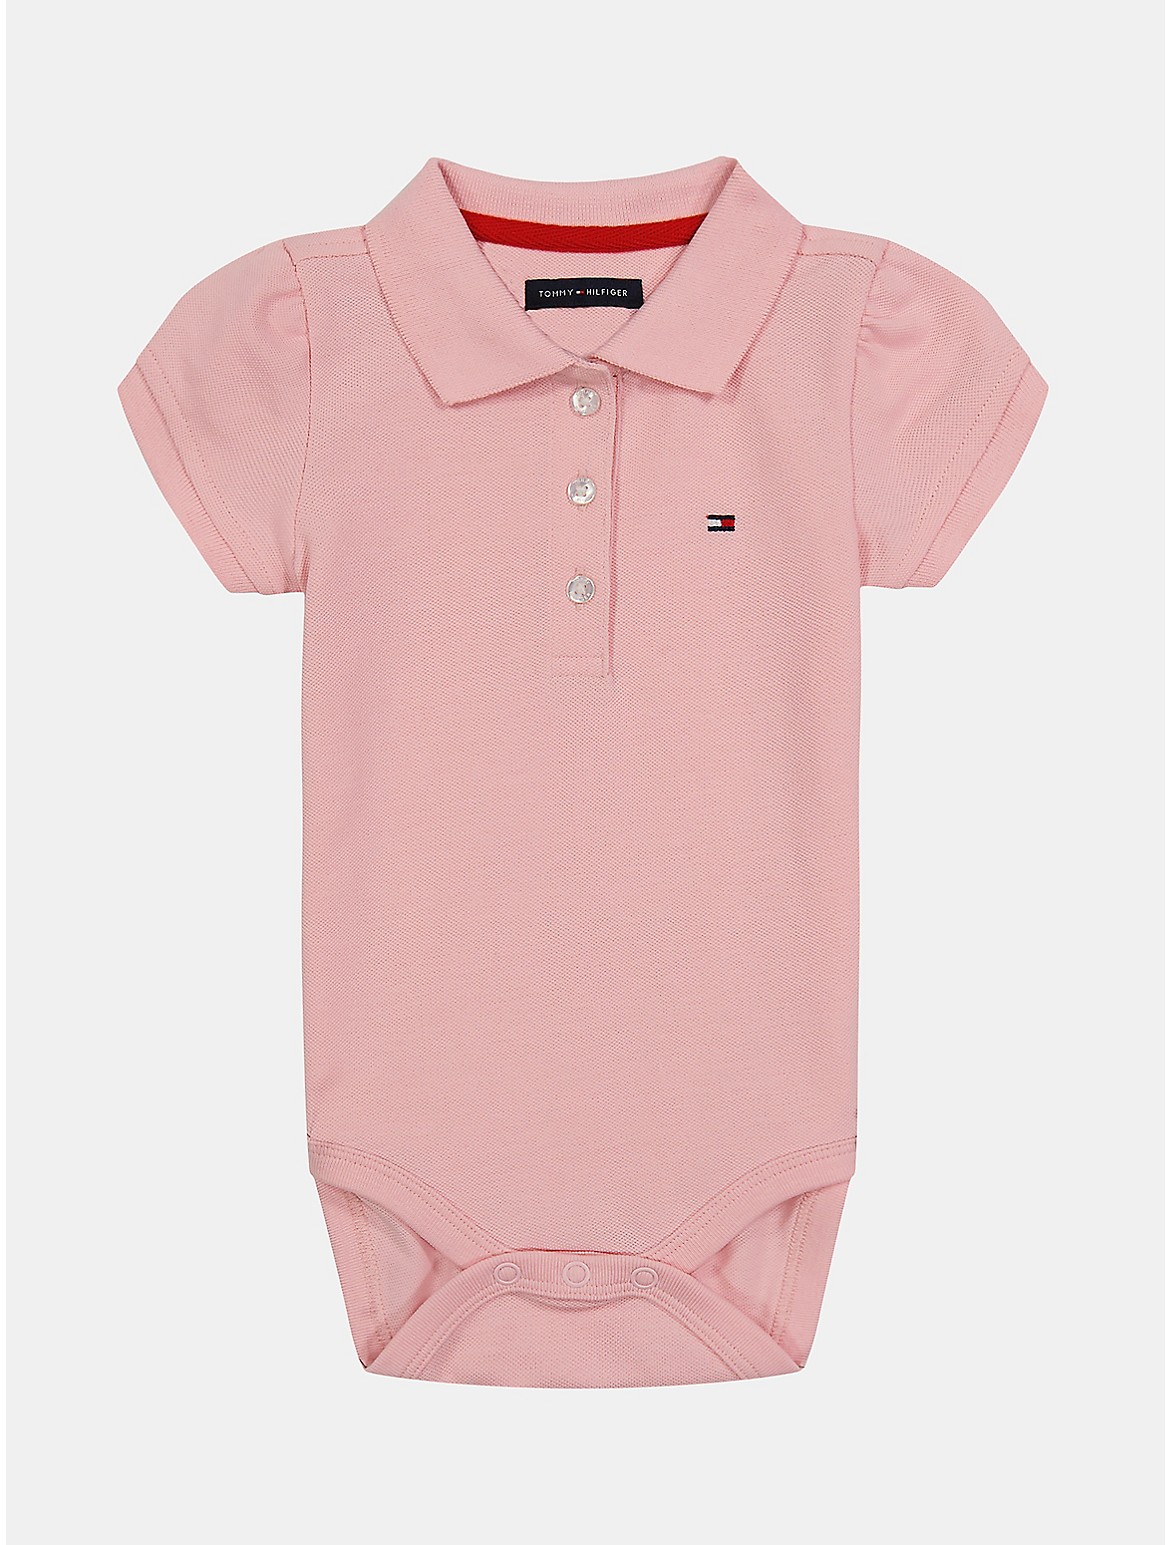 Tommy Hilfiger Girls' Babies' Solid Bodysuit - Pink - 24M